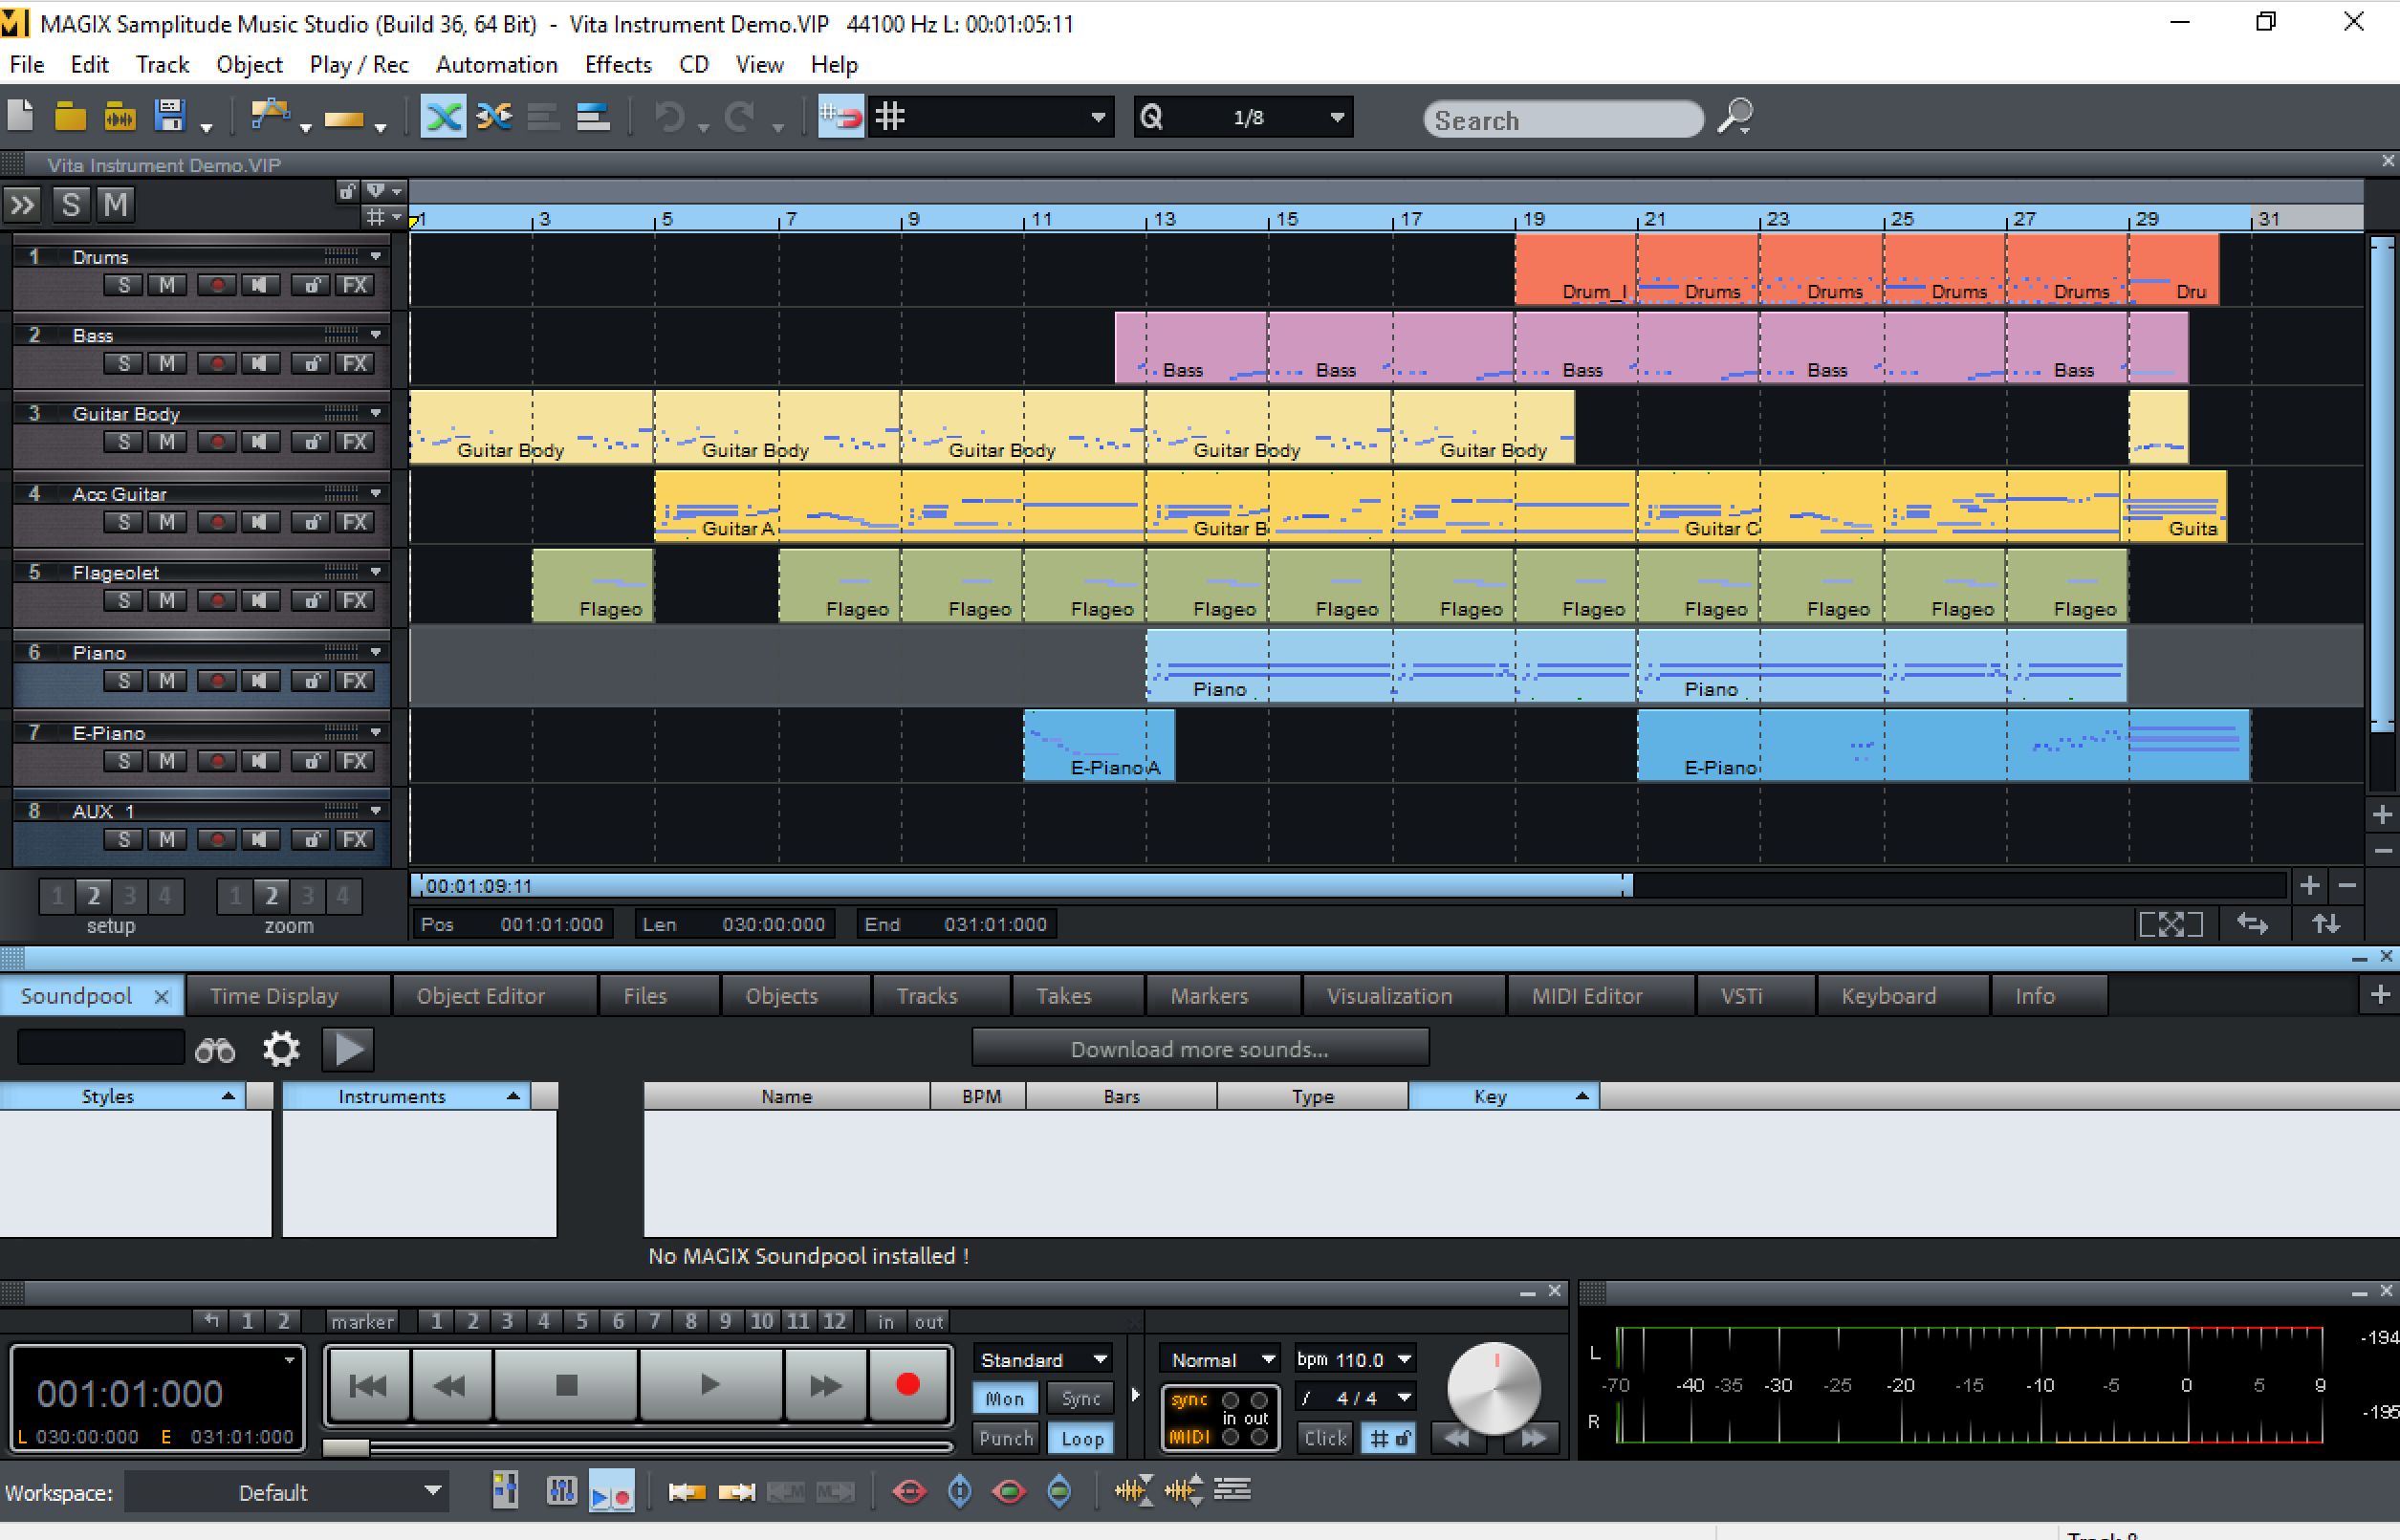 Samplitude Music Studio Full Version Download for Windows 7, 8, 10 - GURU99